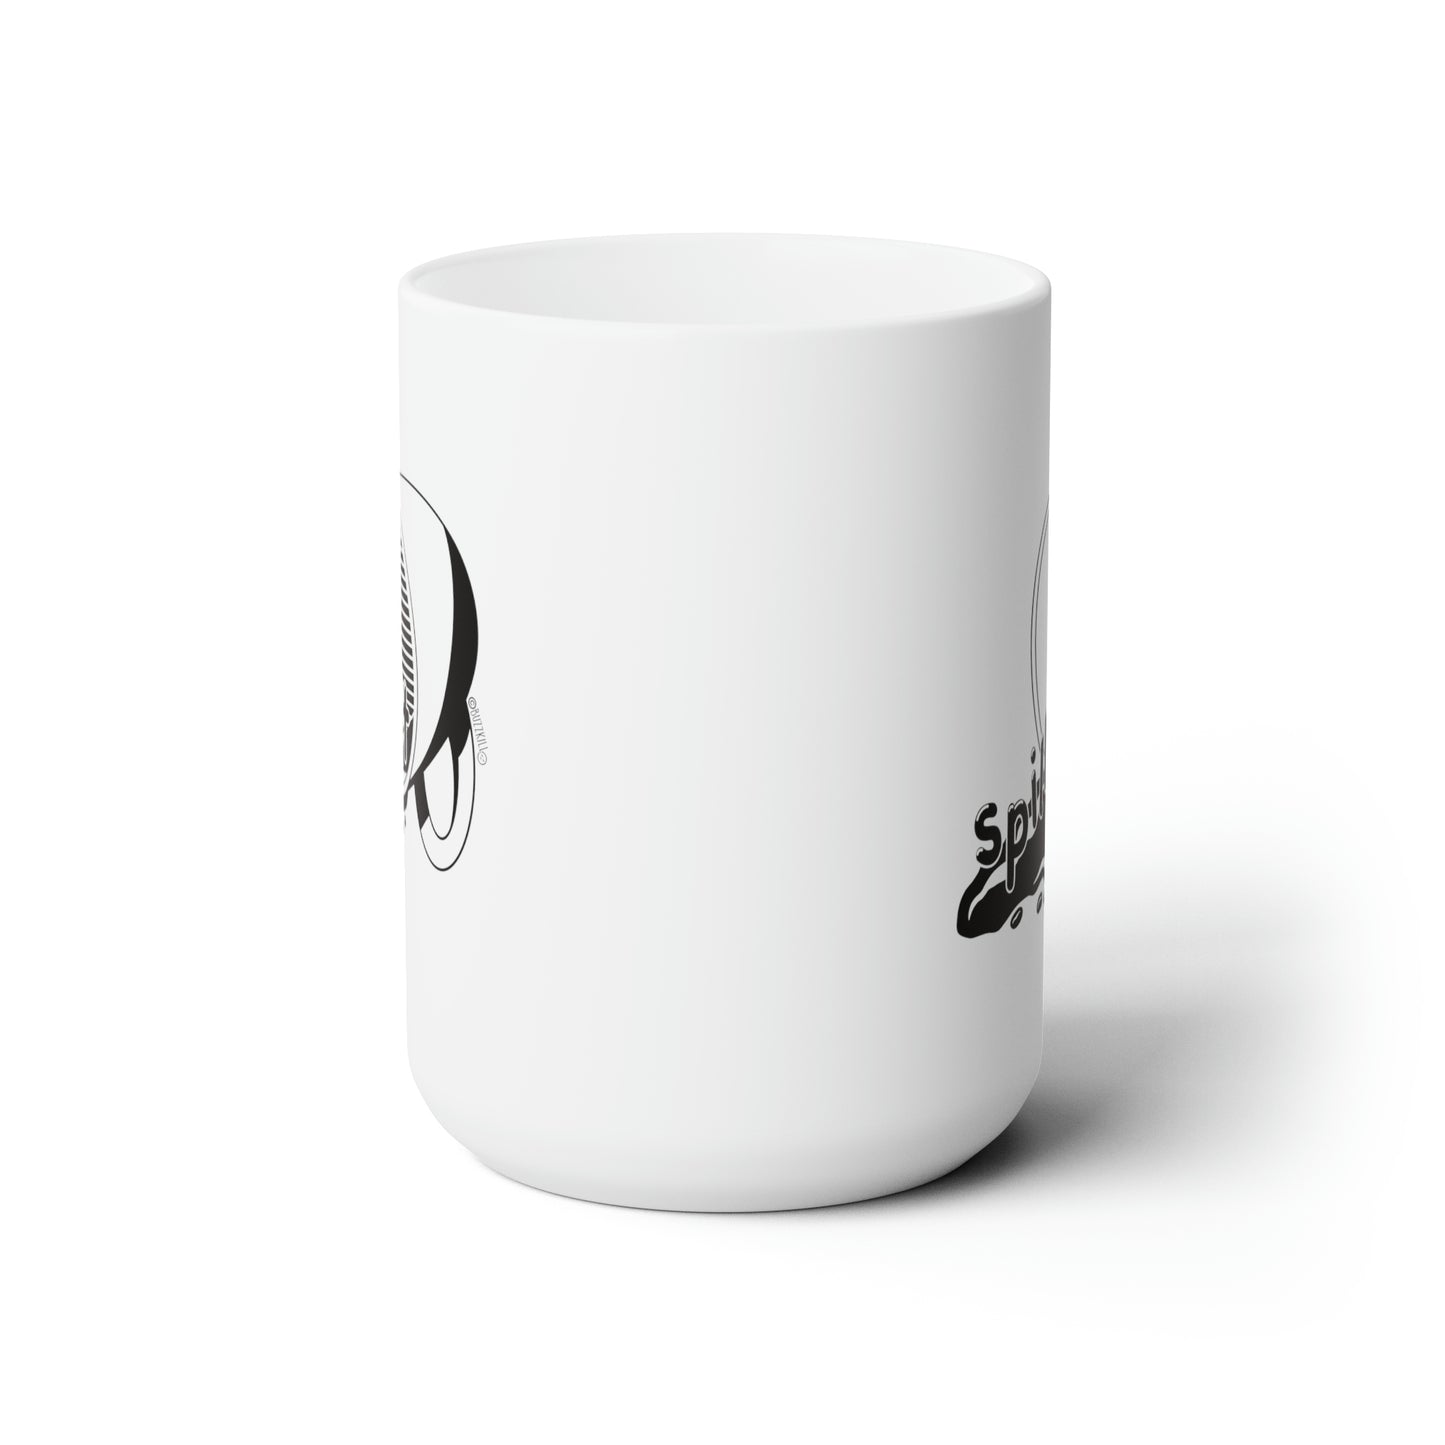 Spill It - Ceramic Mug 15oz